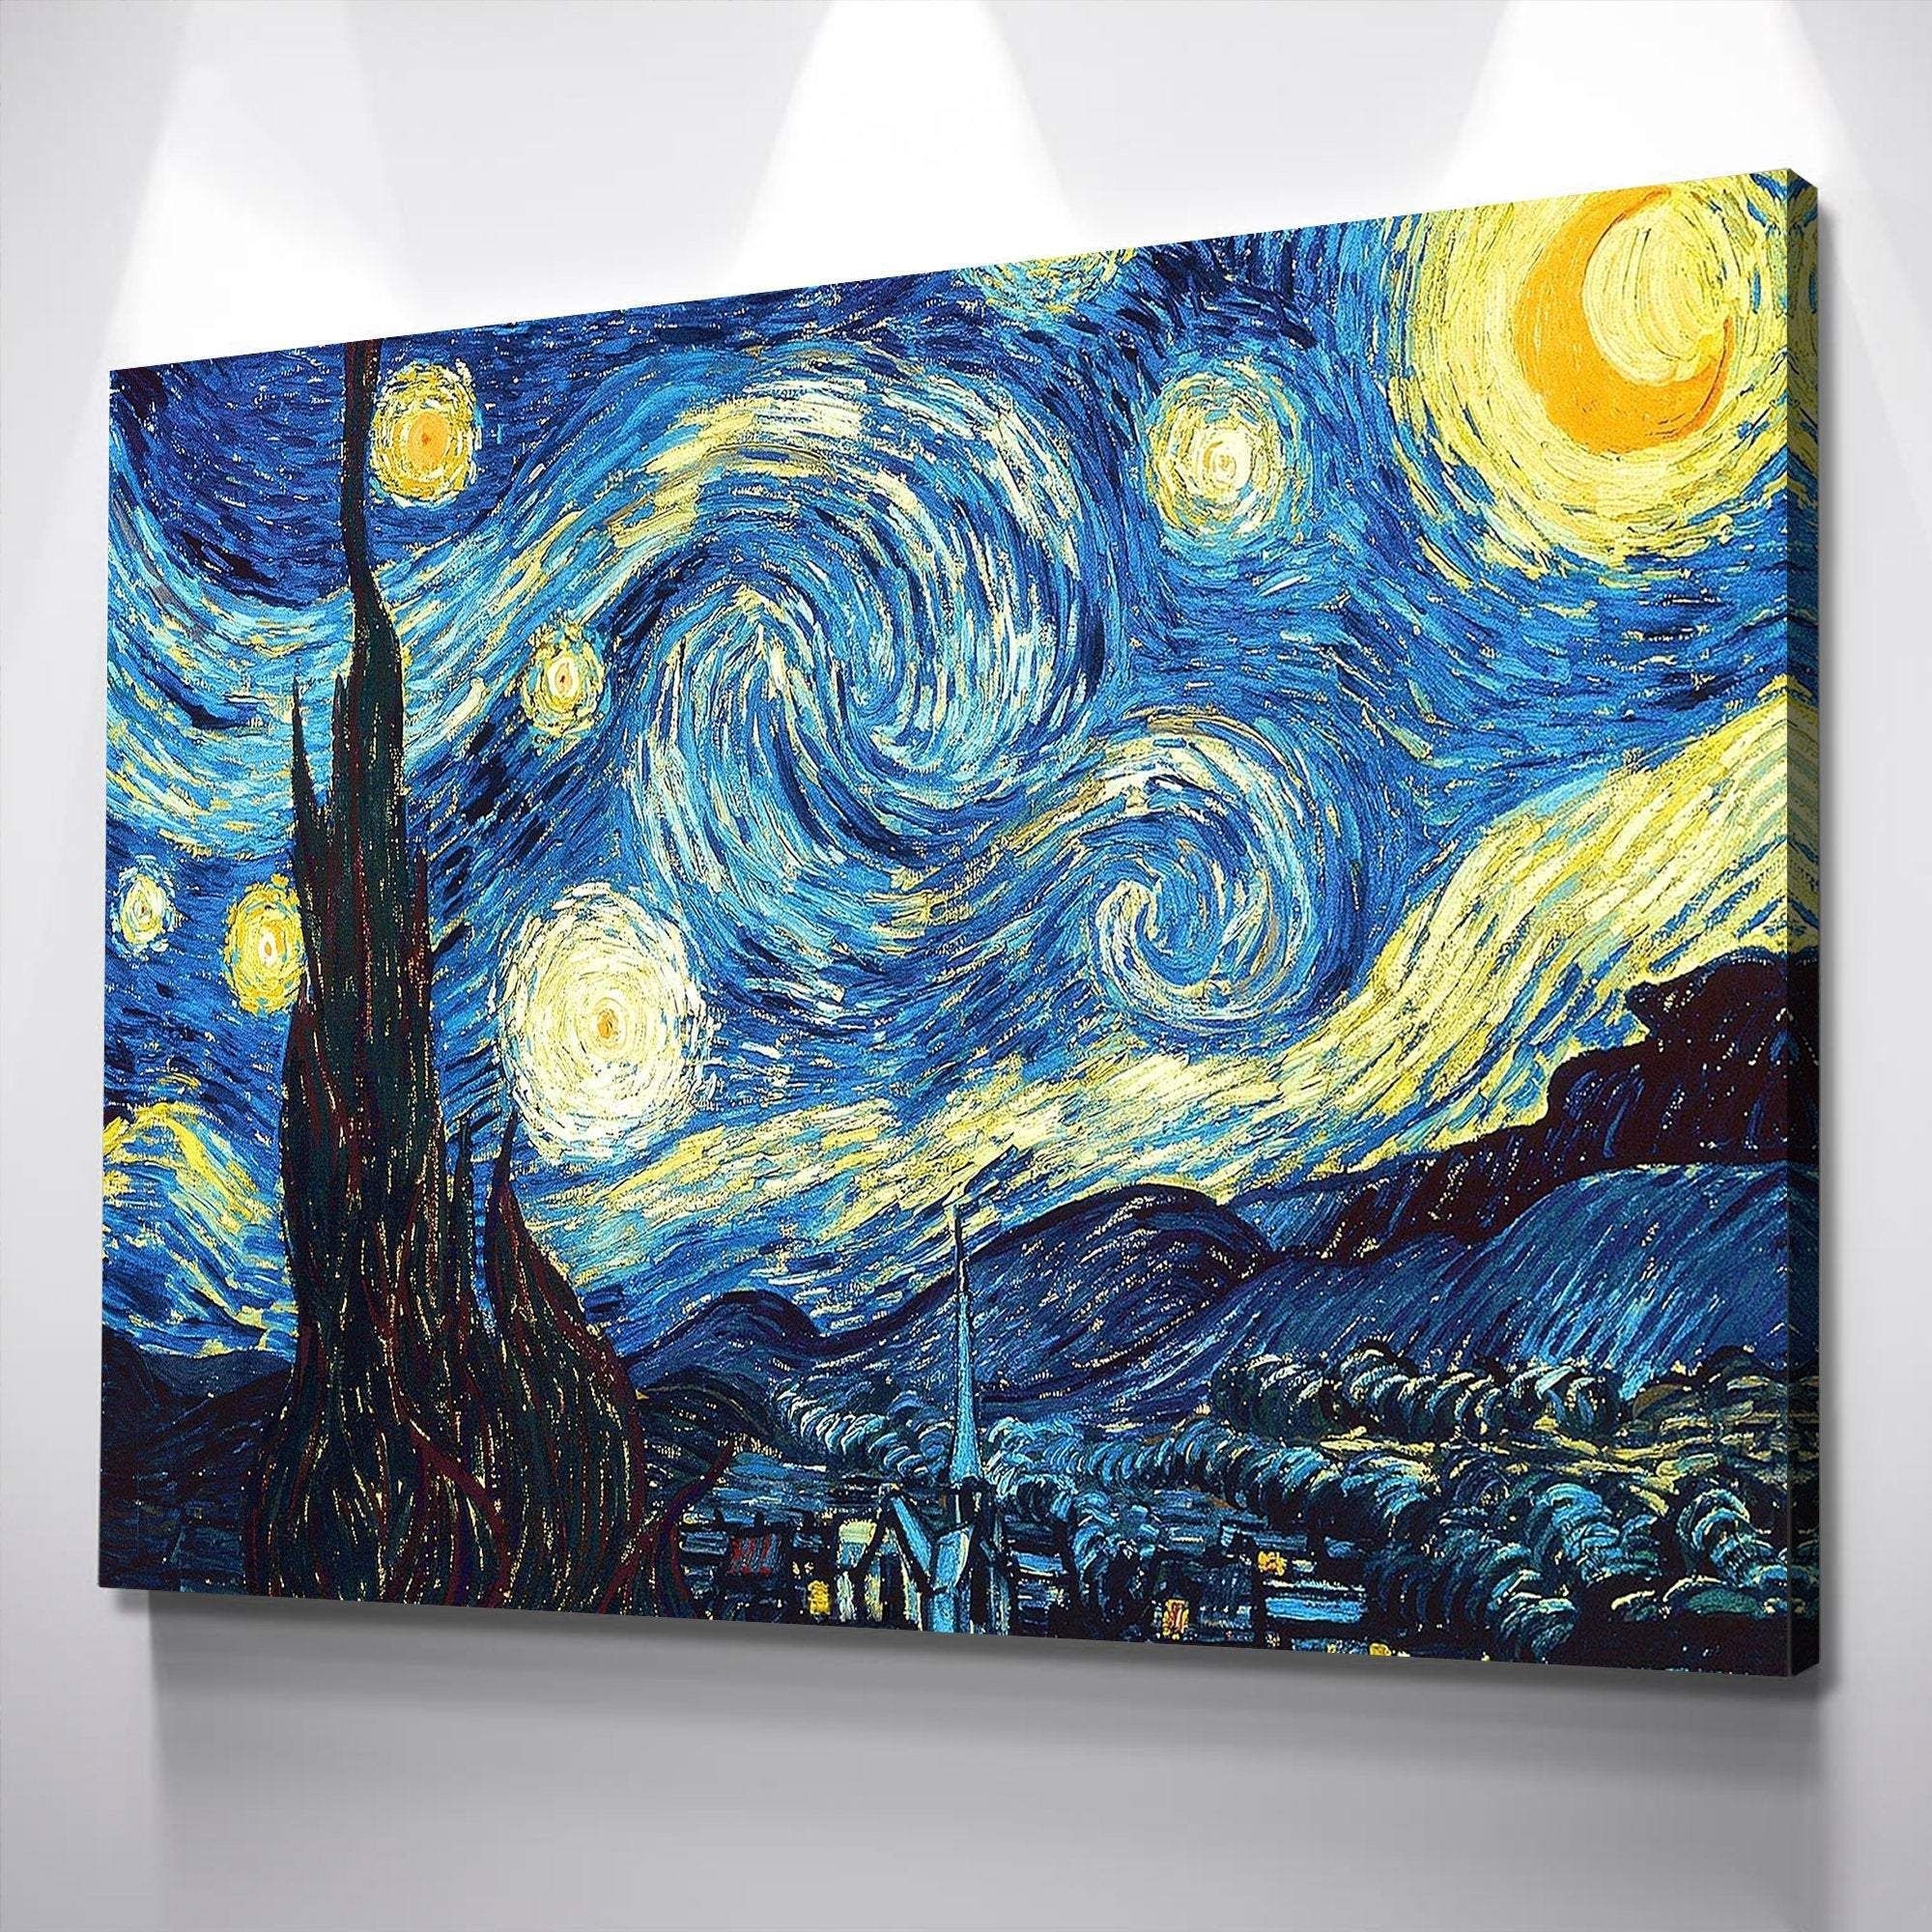 The Starry Night, Vincent van Gogh, famous painting, fine art print, 2000x2000 HD Handy